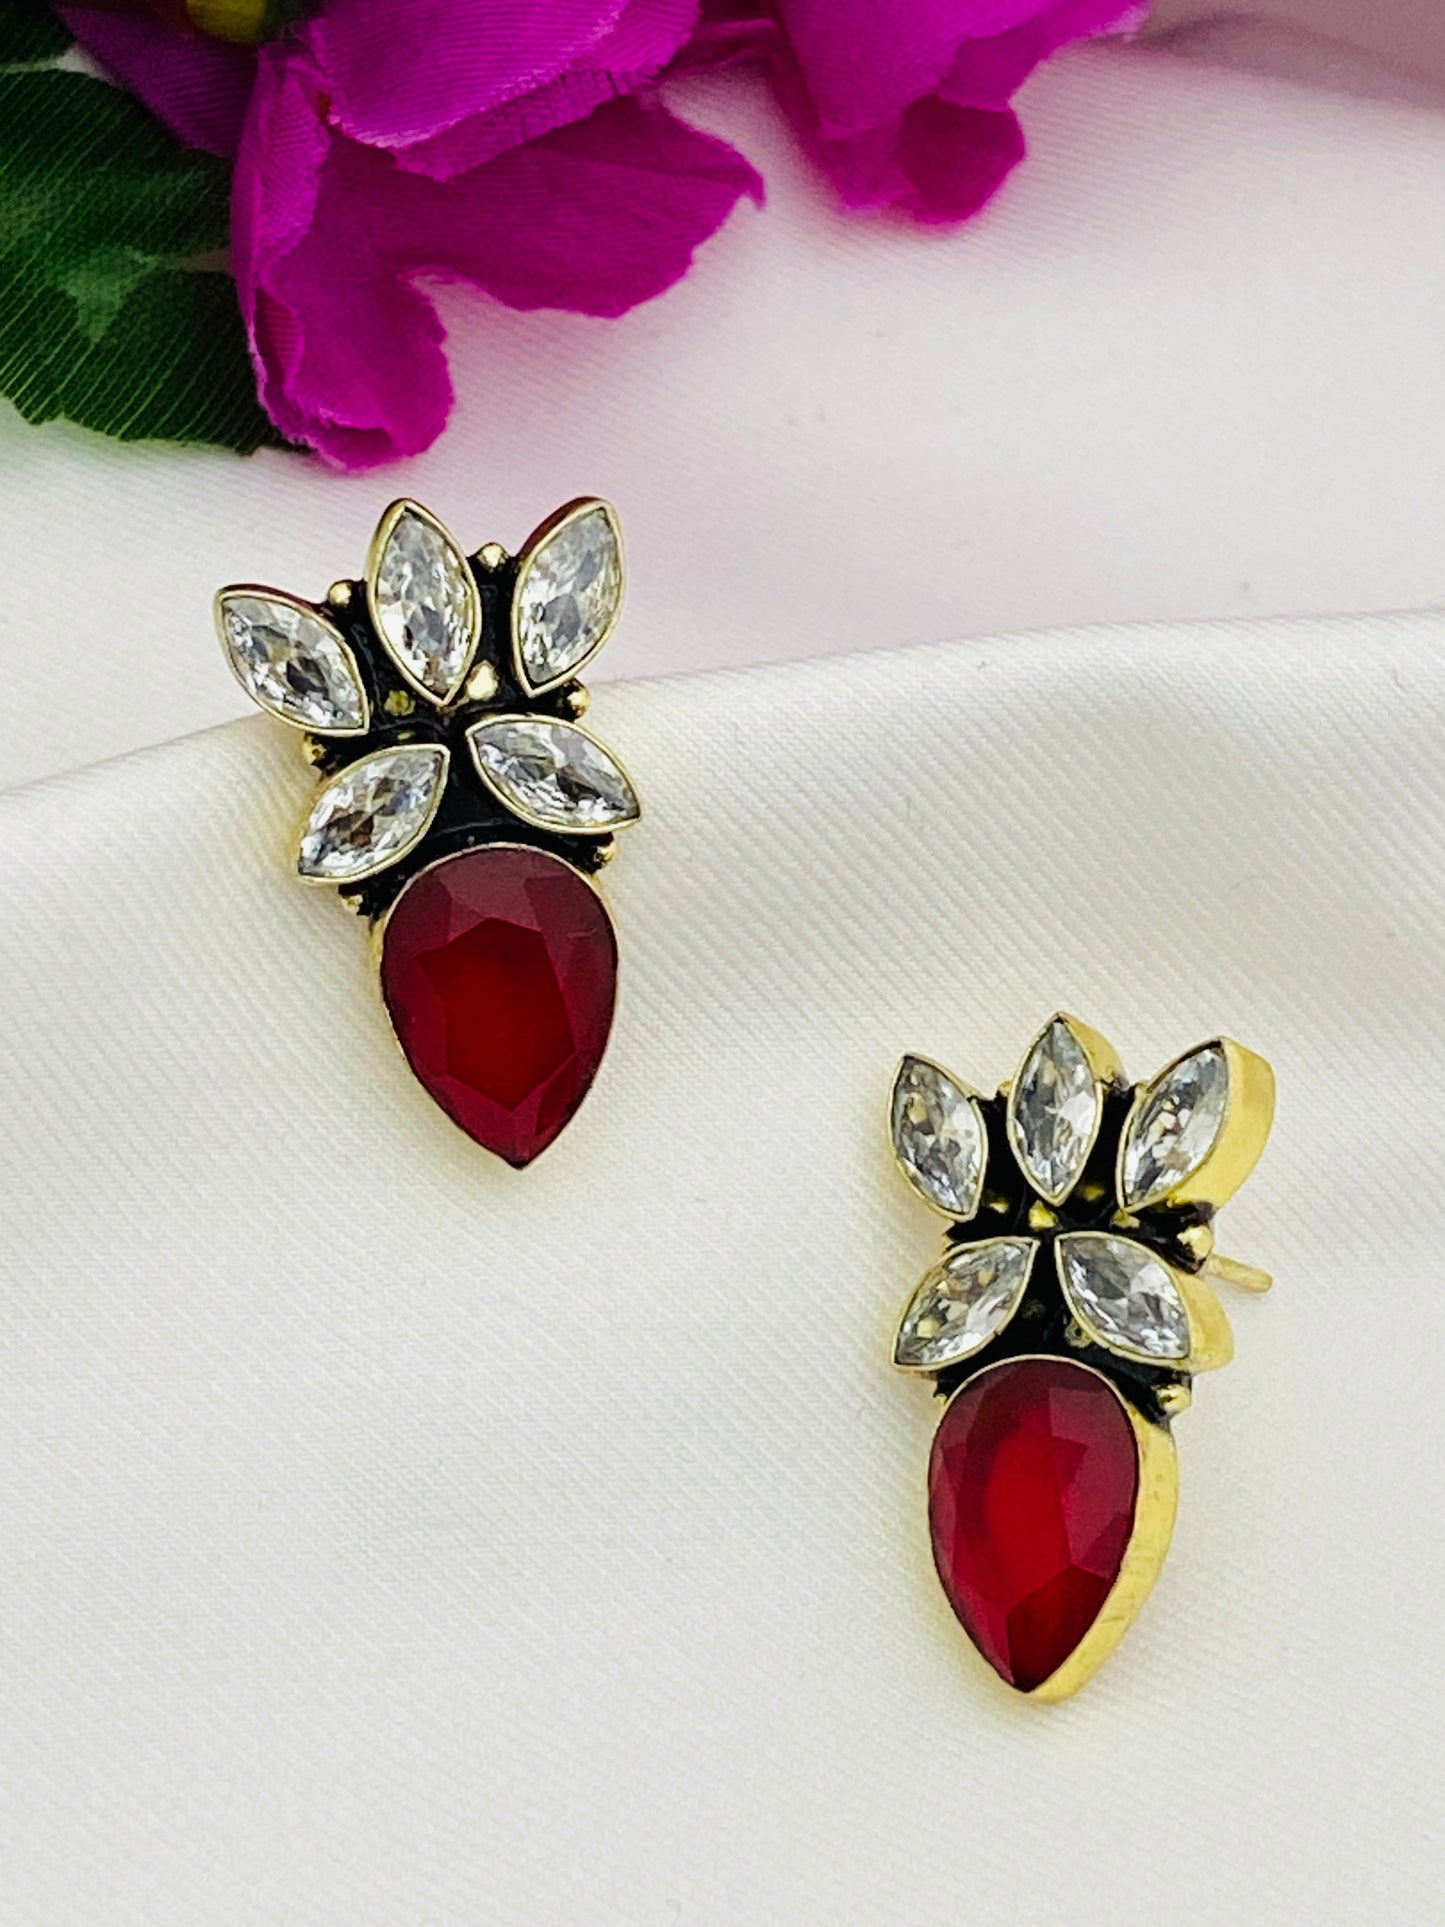 Floral Designed Stylish Stud Earrings For Women in Sedona